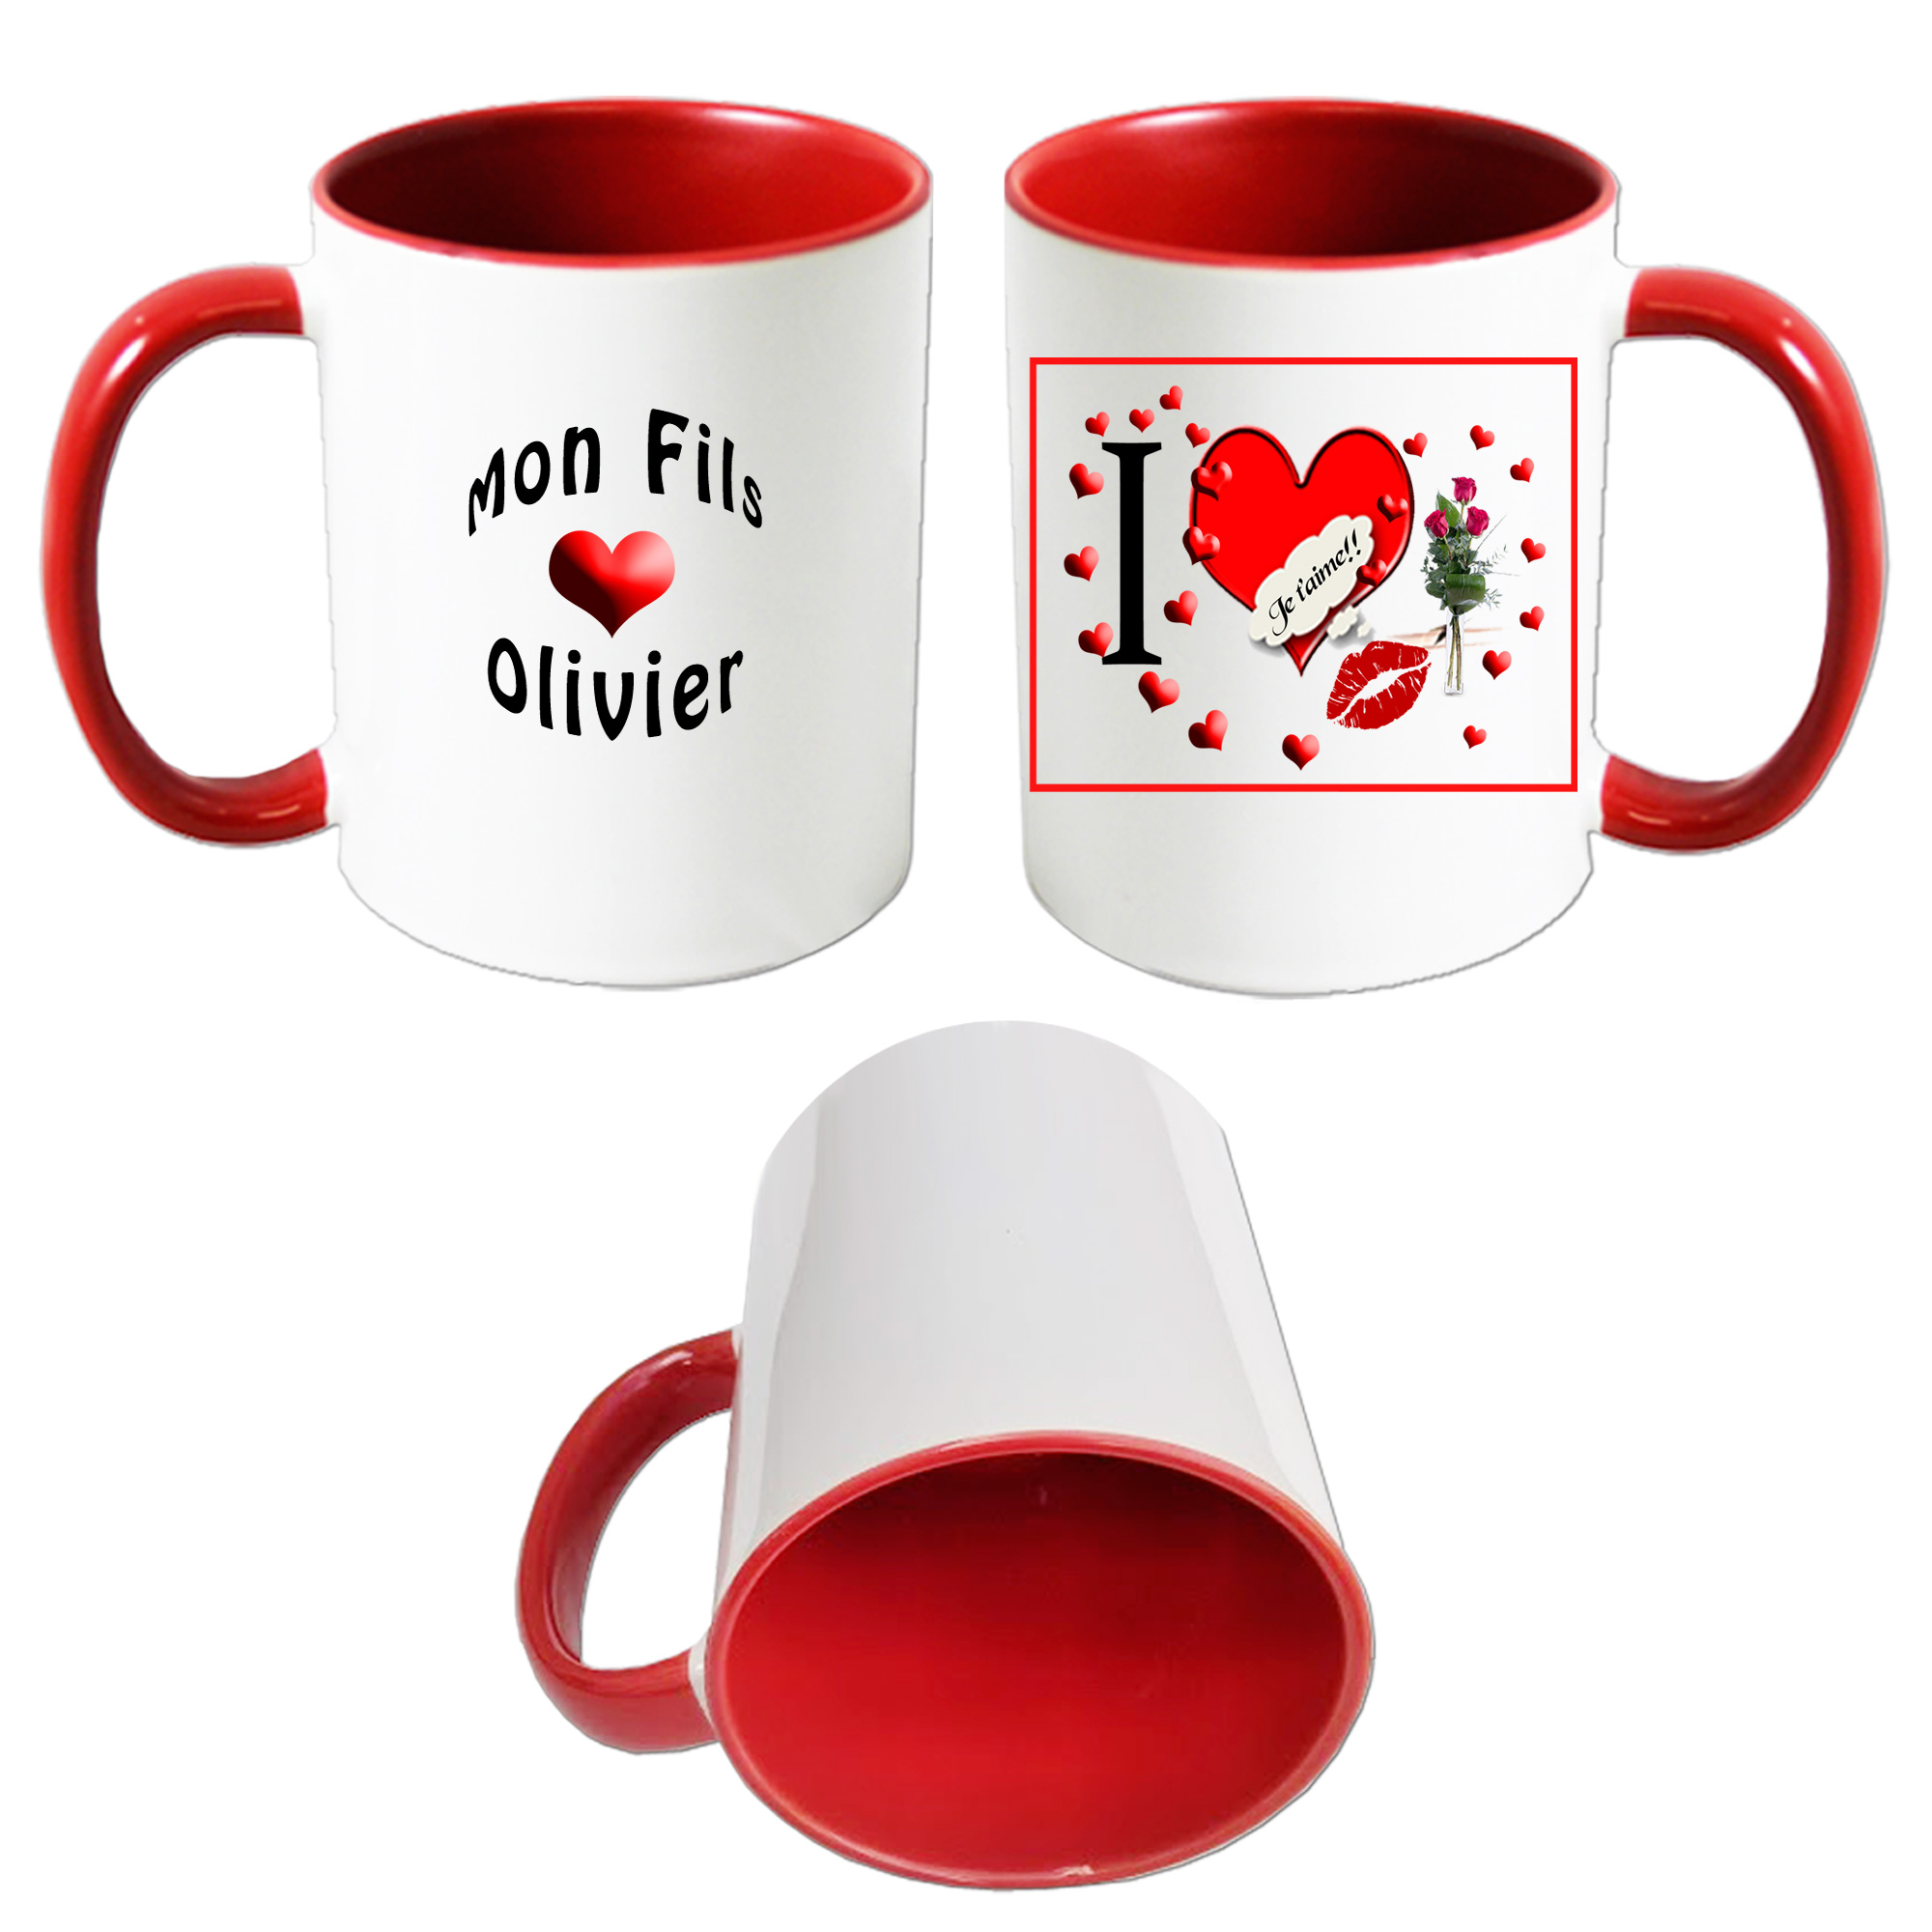 famille-monfils-mug-rouge-personnalisable-coeur-love-amour-phrase-rectangle-prenom-olivier